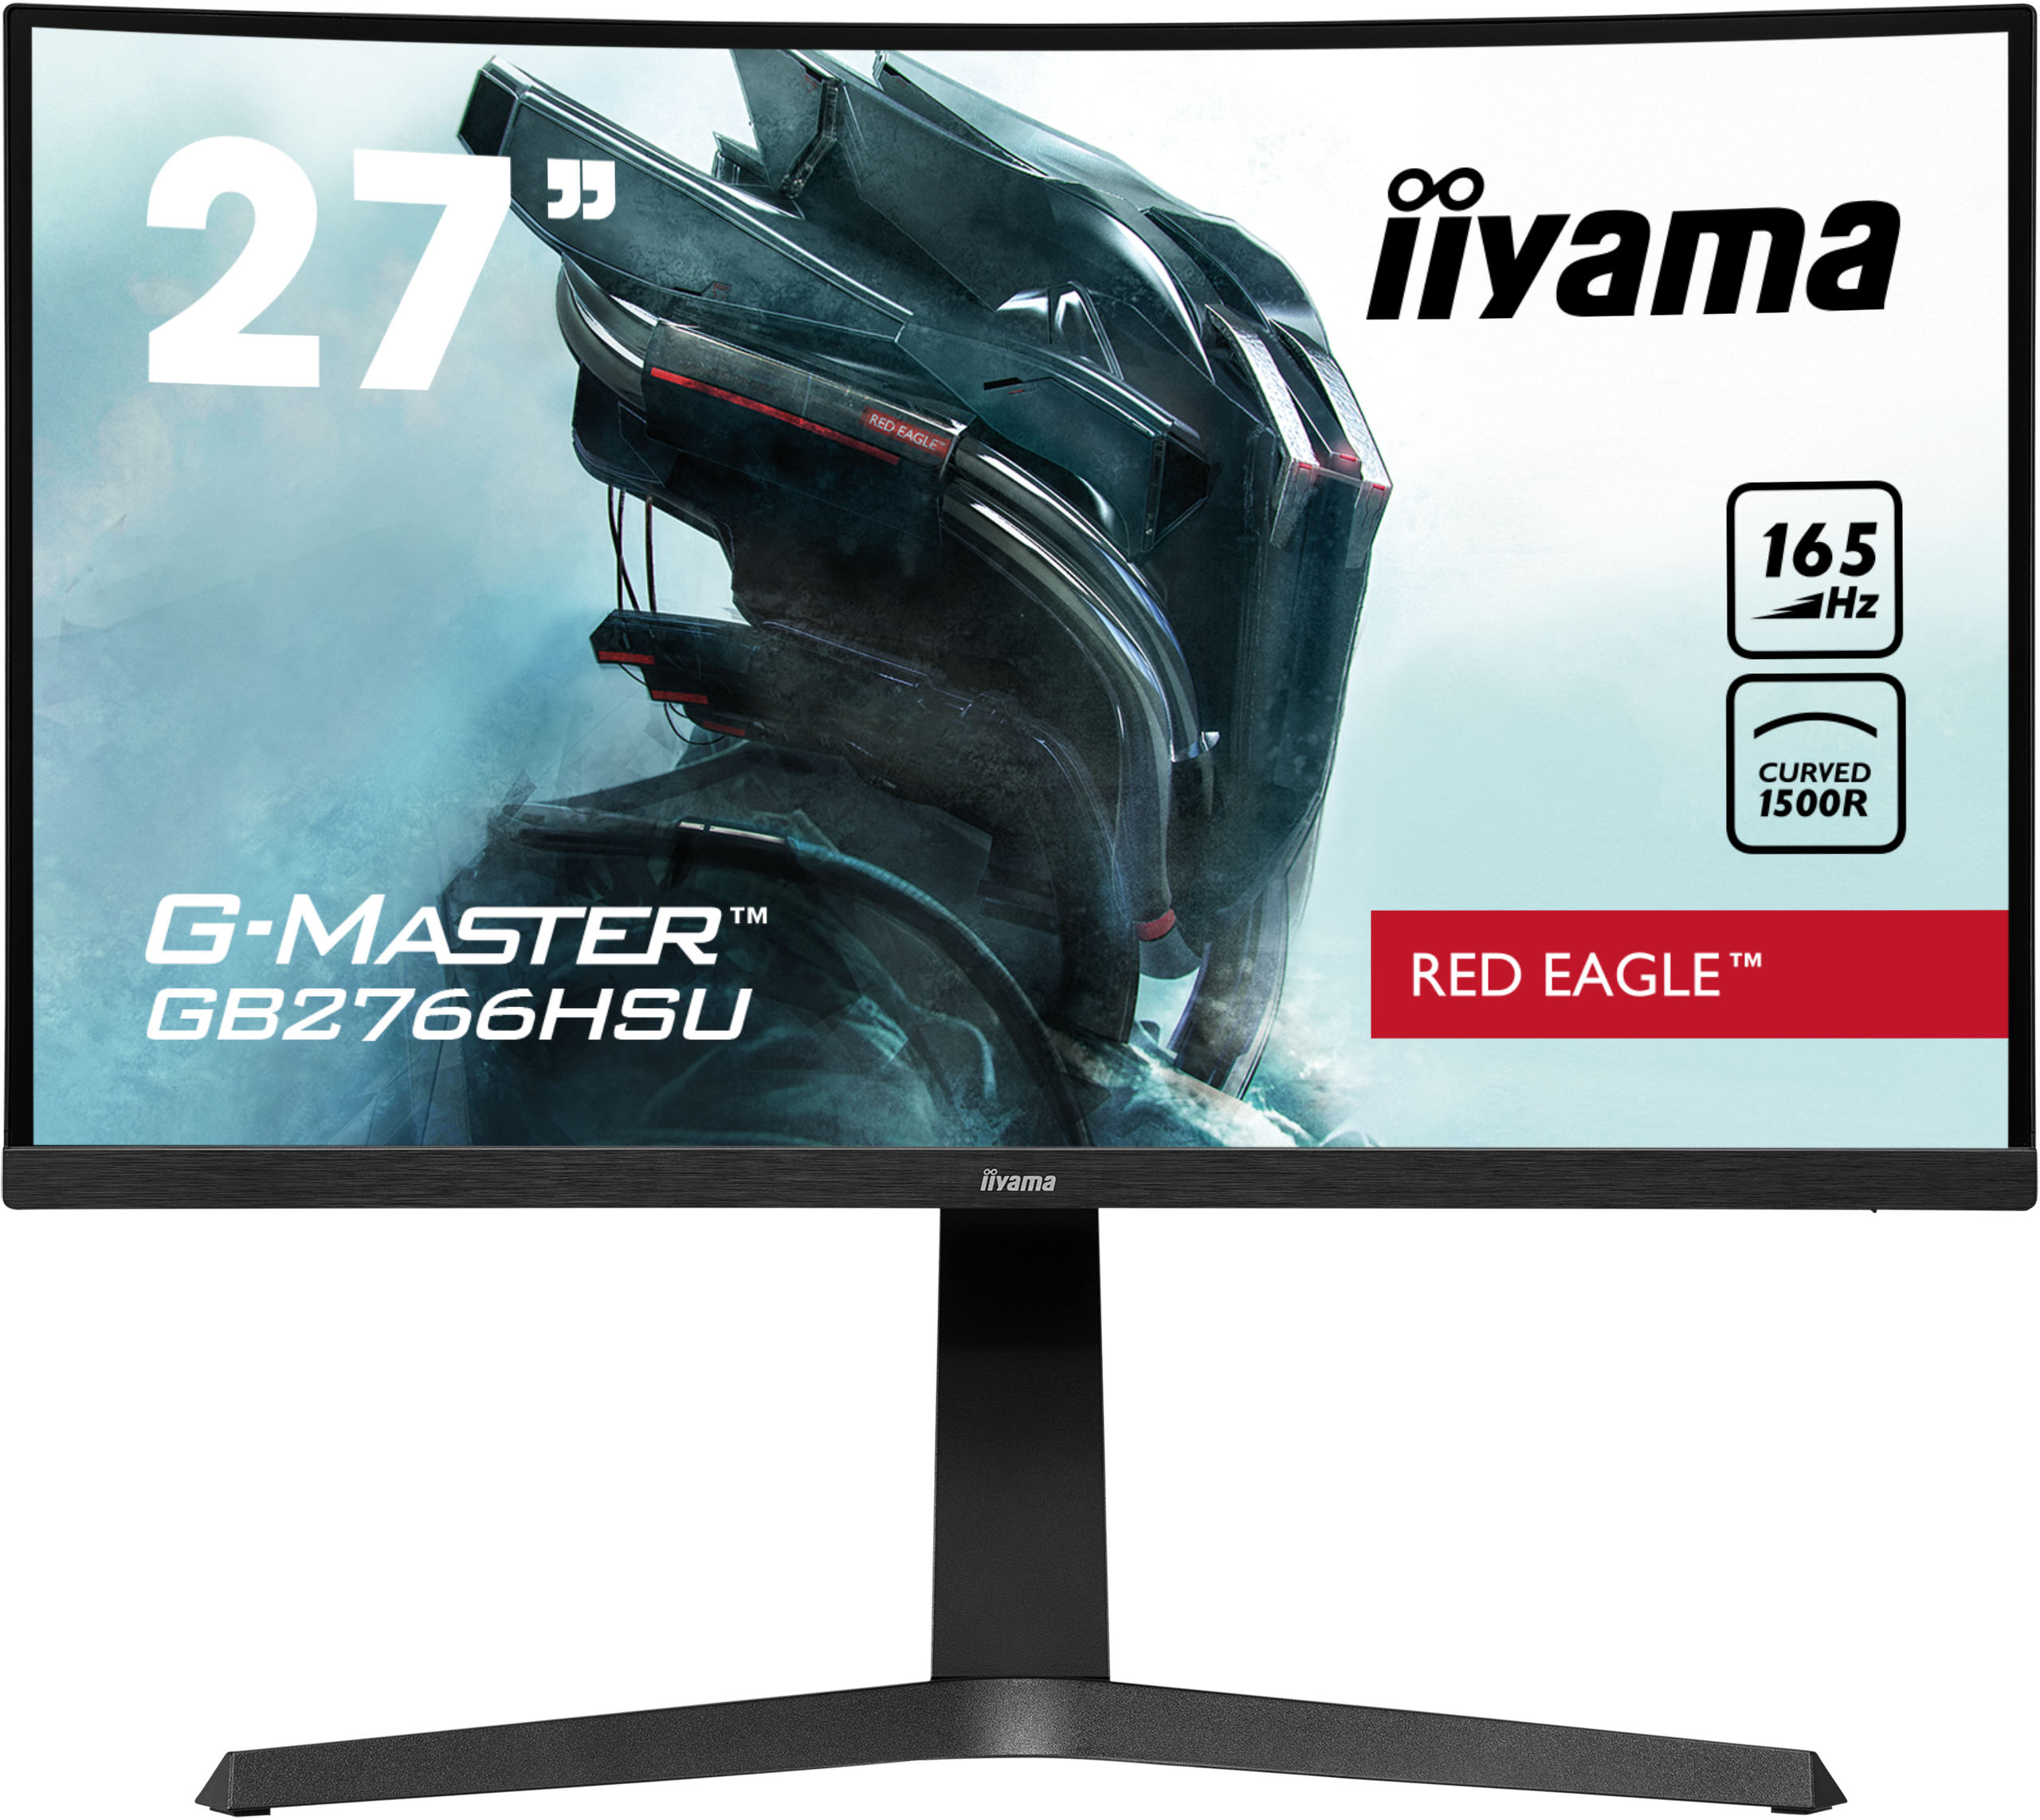 Iiyama G-MASTER GB2766HSU-B1 RED EAGLE | 27" | 1920 x 1080 @165Hz (2.1 megapixel Full HD) | Curved-Gaming-Monitor